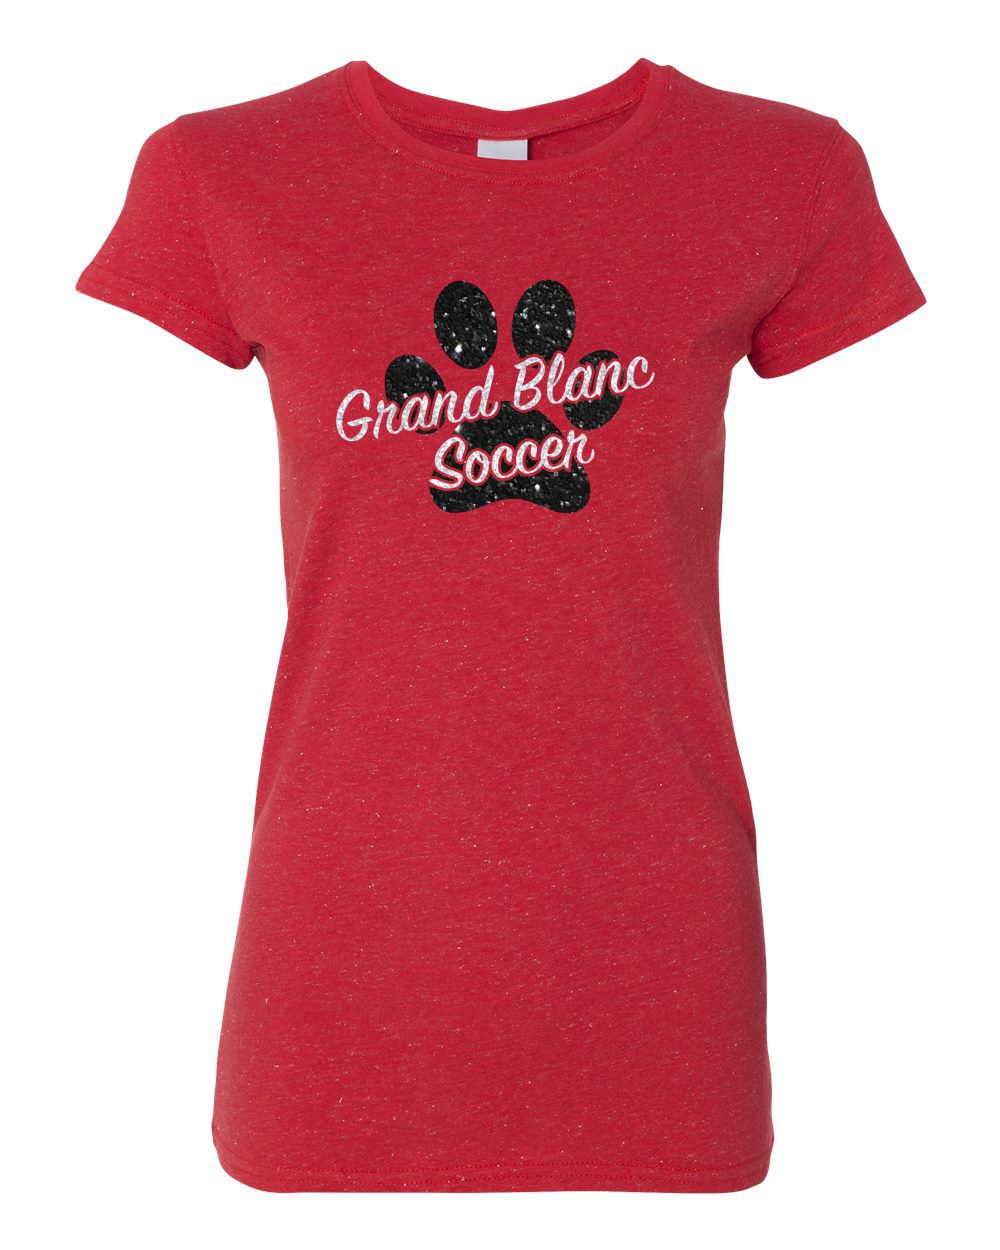 Grand Blanc Soccer Glitter-on-Glitter Ladies T-shirt